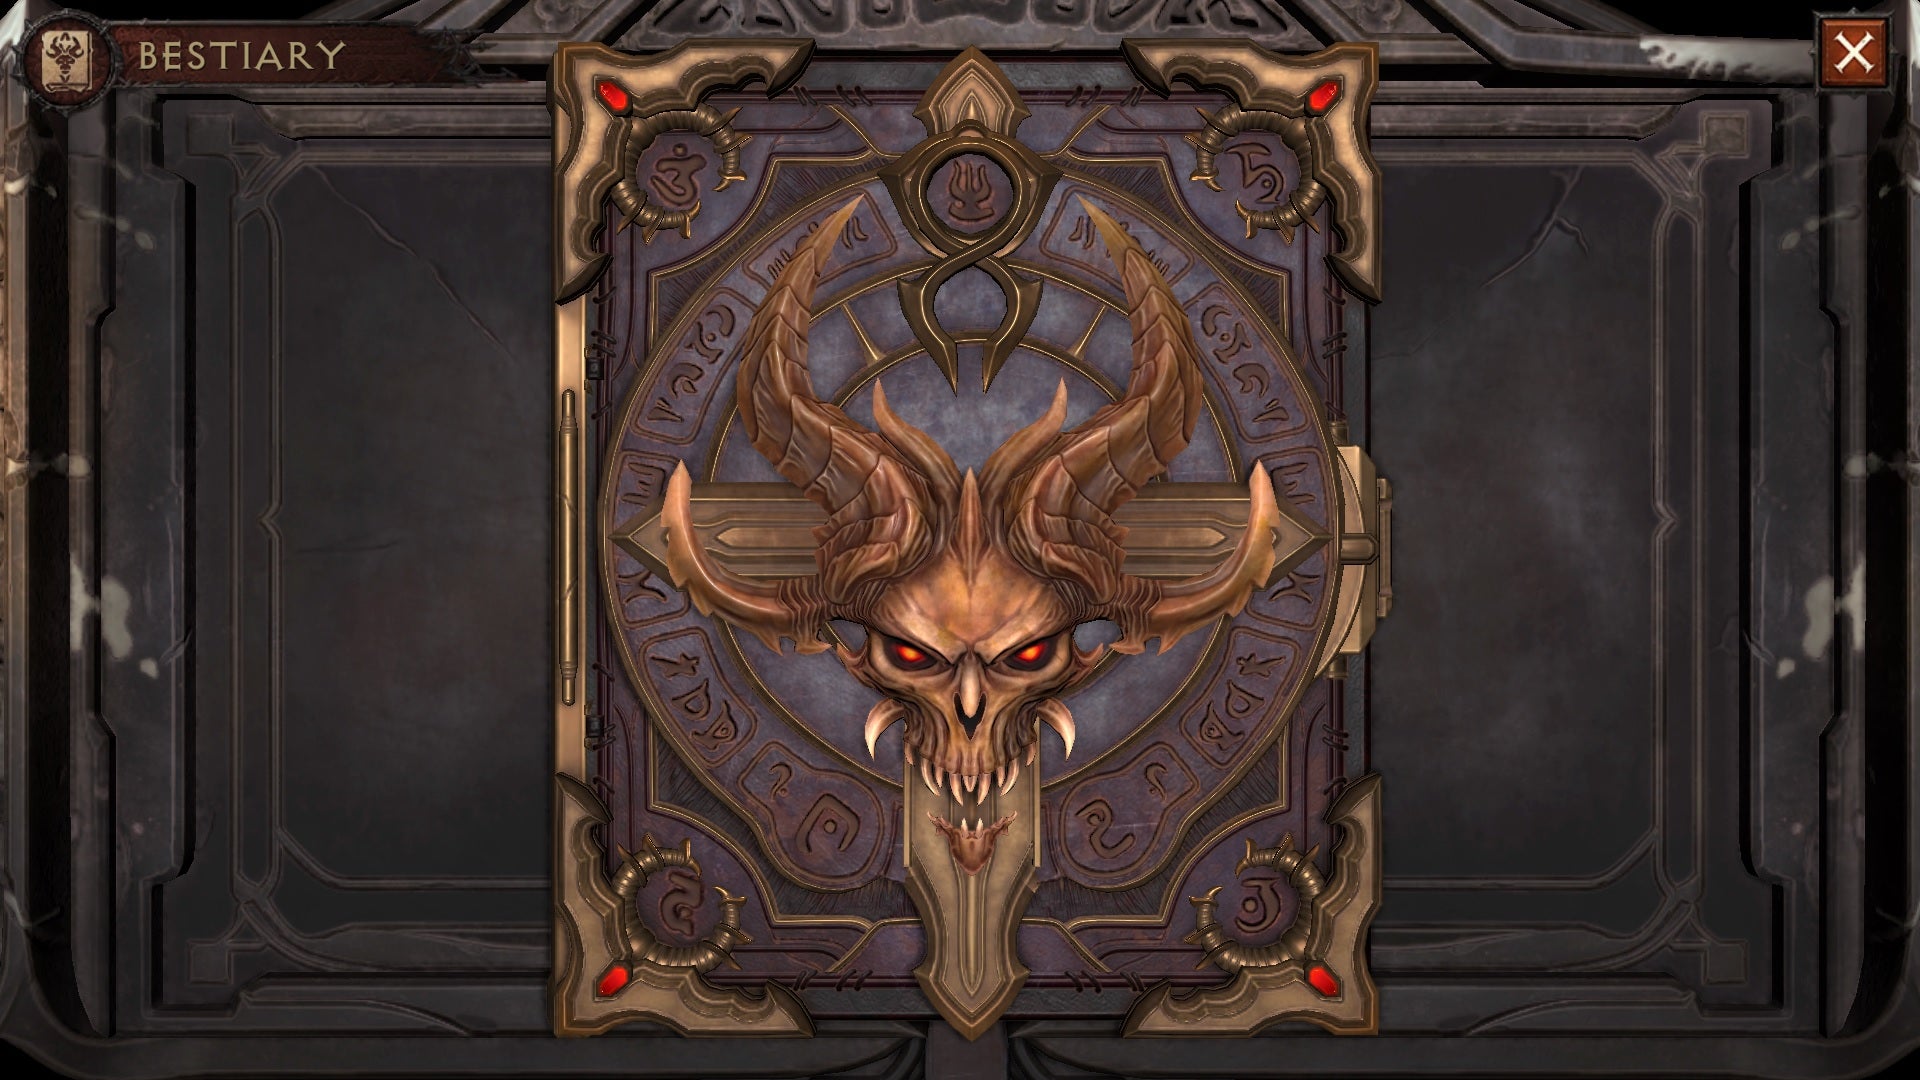 The Horadric Bestiary in Diablo Immortal